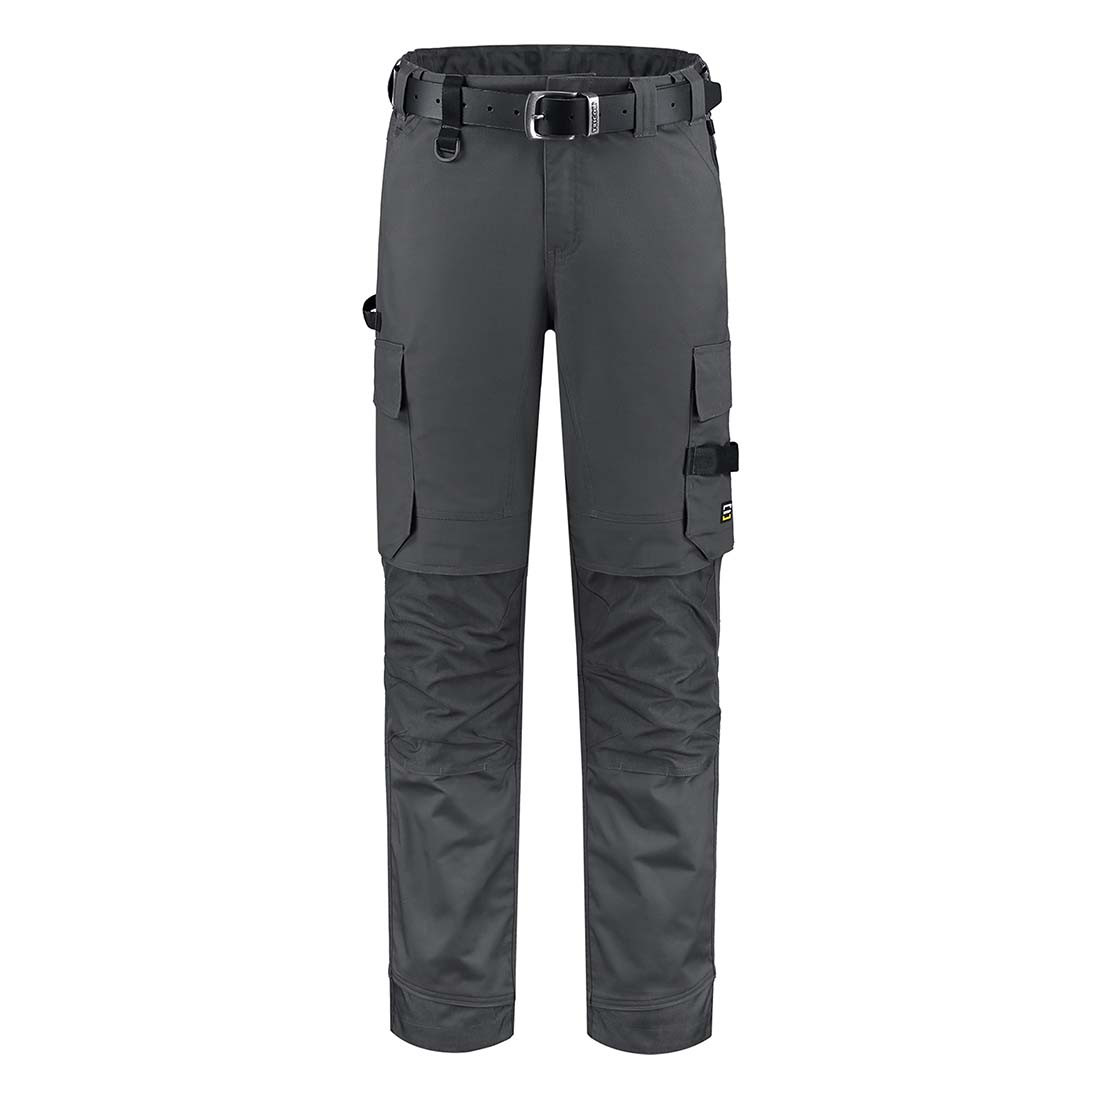 Unisex Stretch Work Trousers - Safetywear